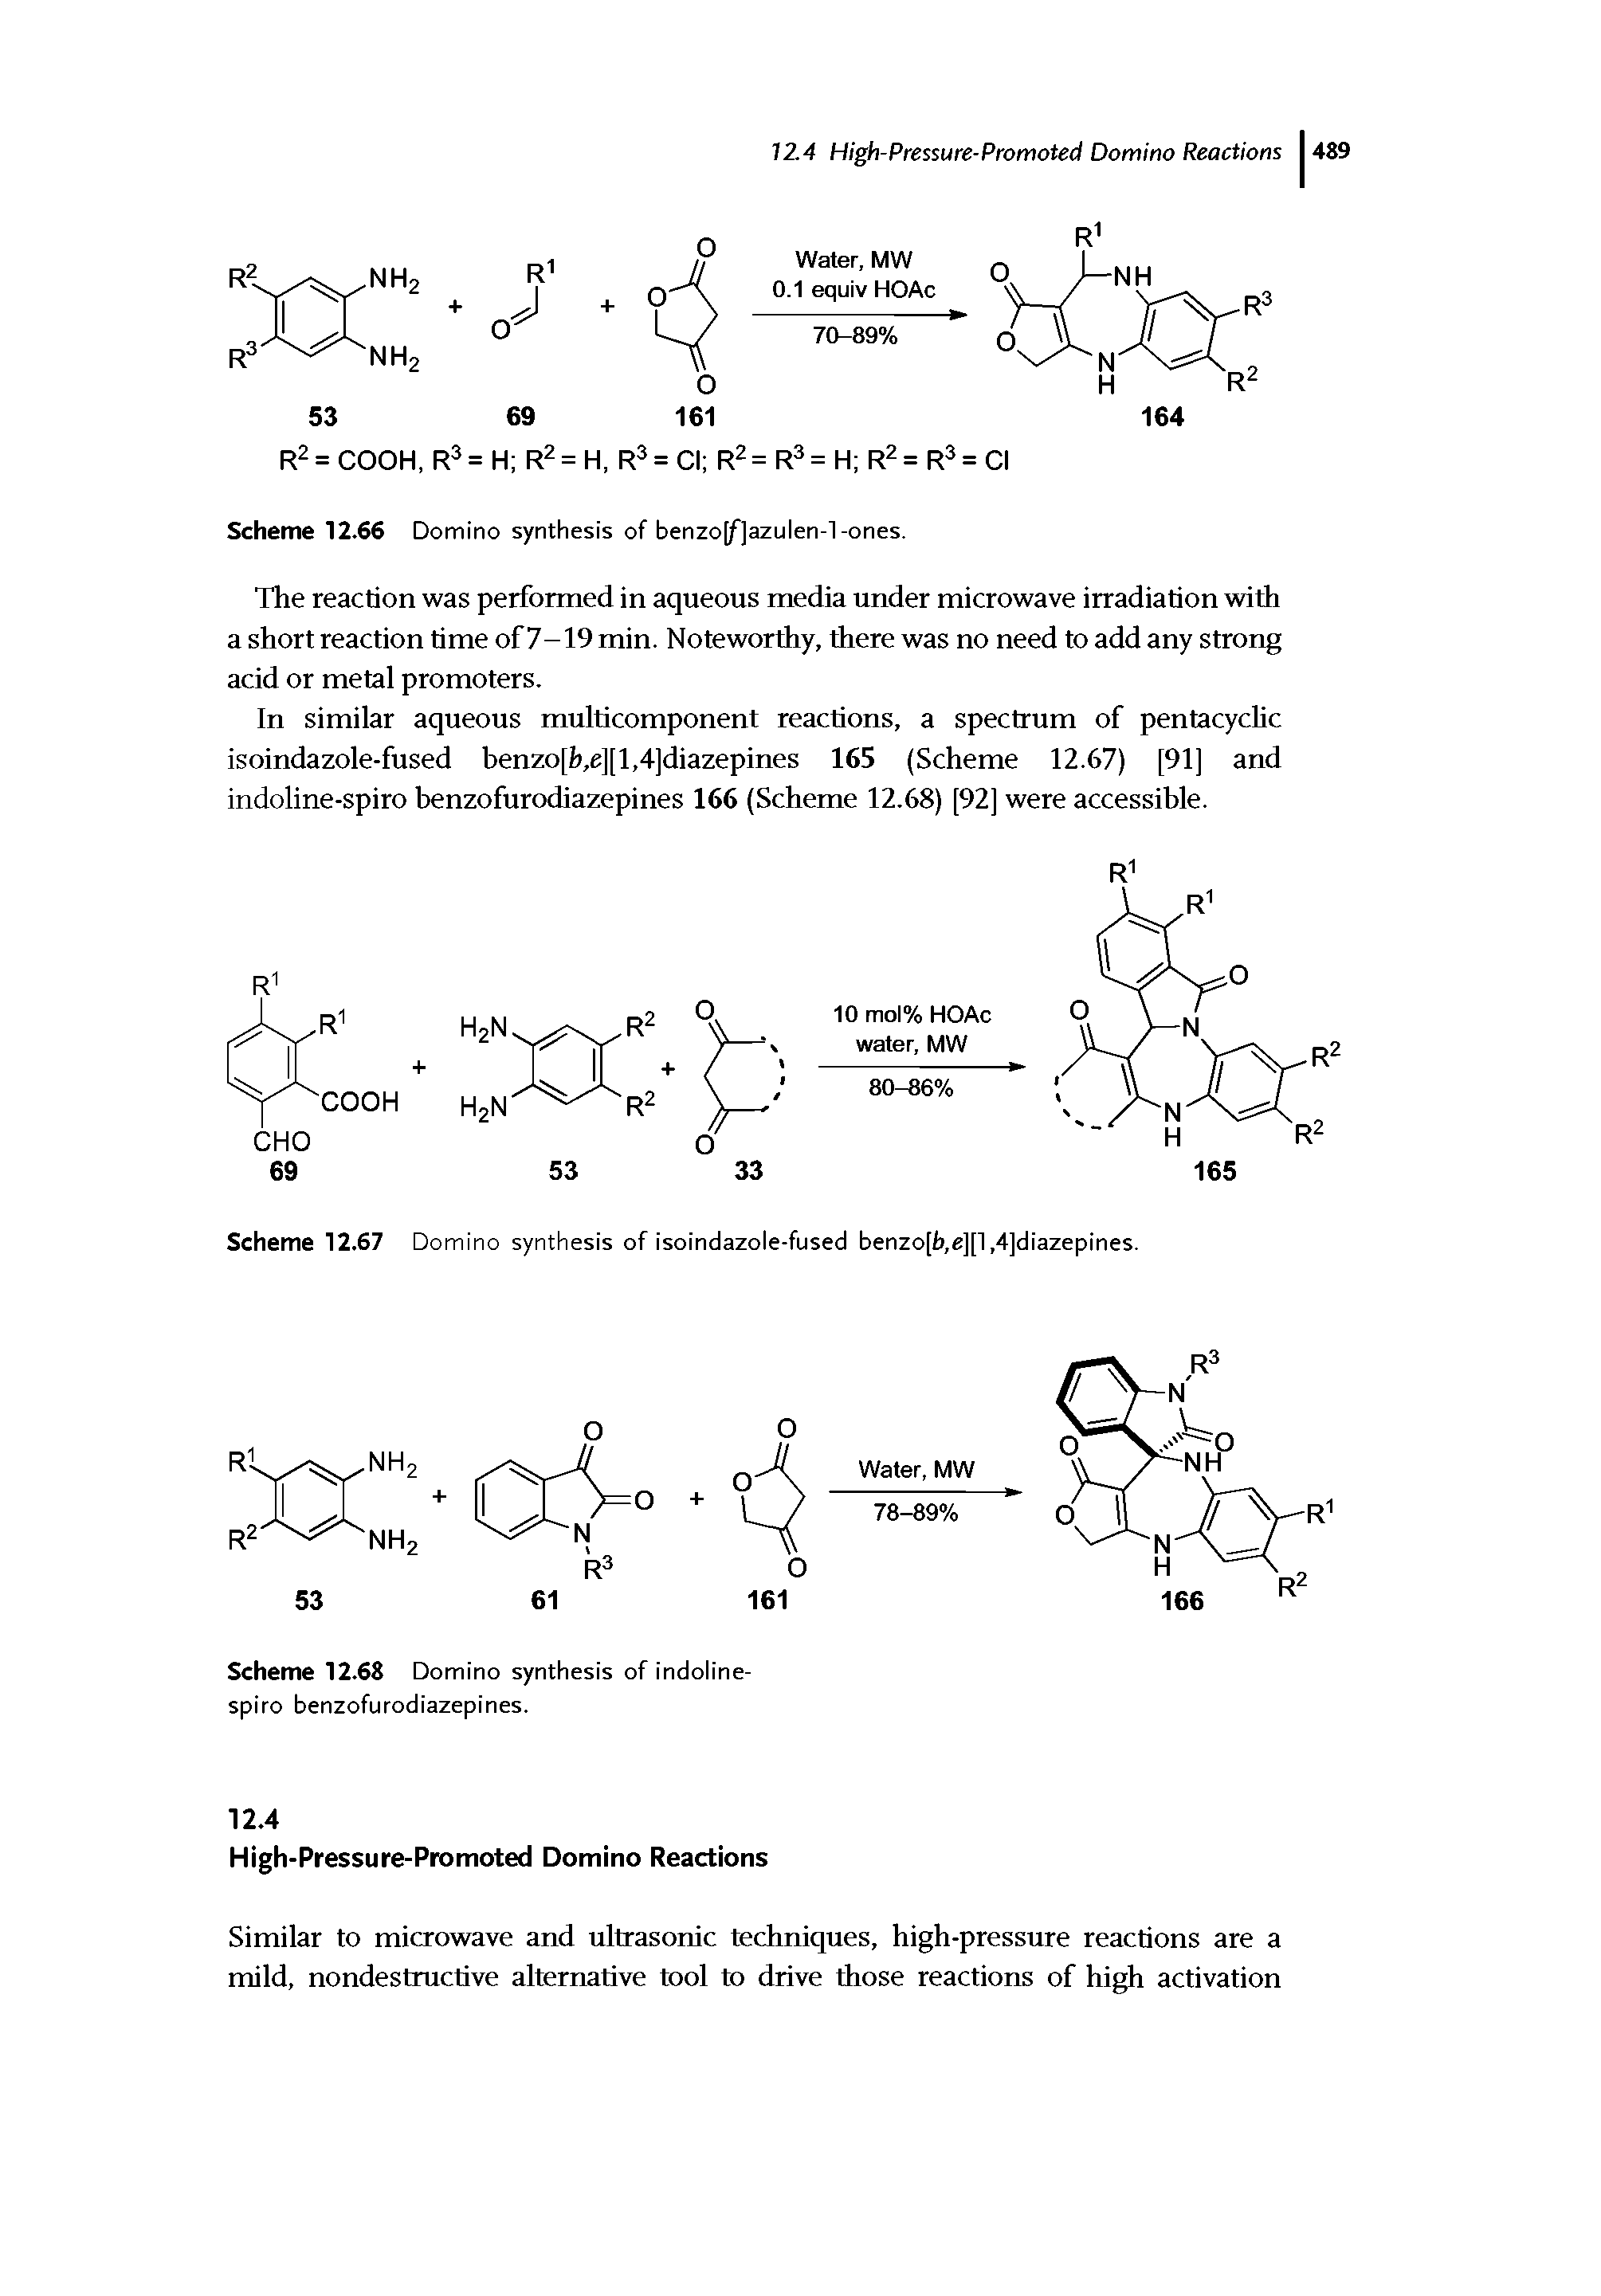 Scheme 12.68 Domino synthesis of indoline-spiro benzofurodiazepines.